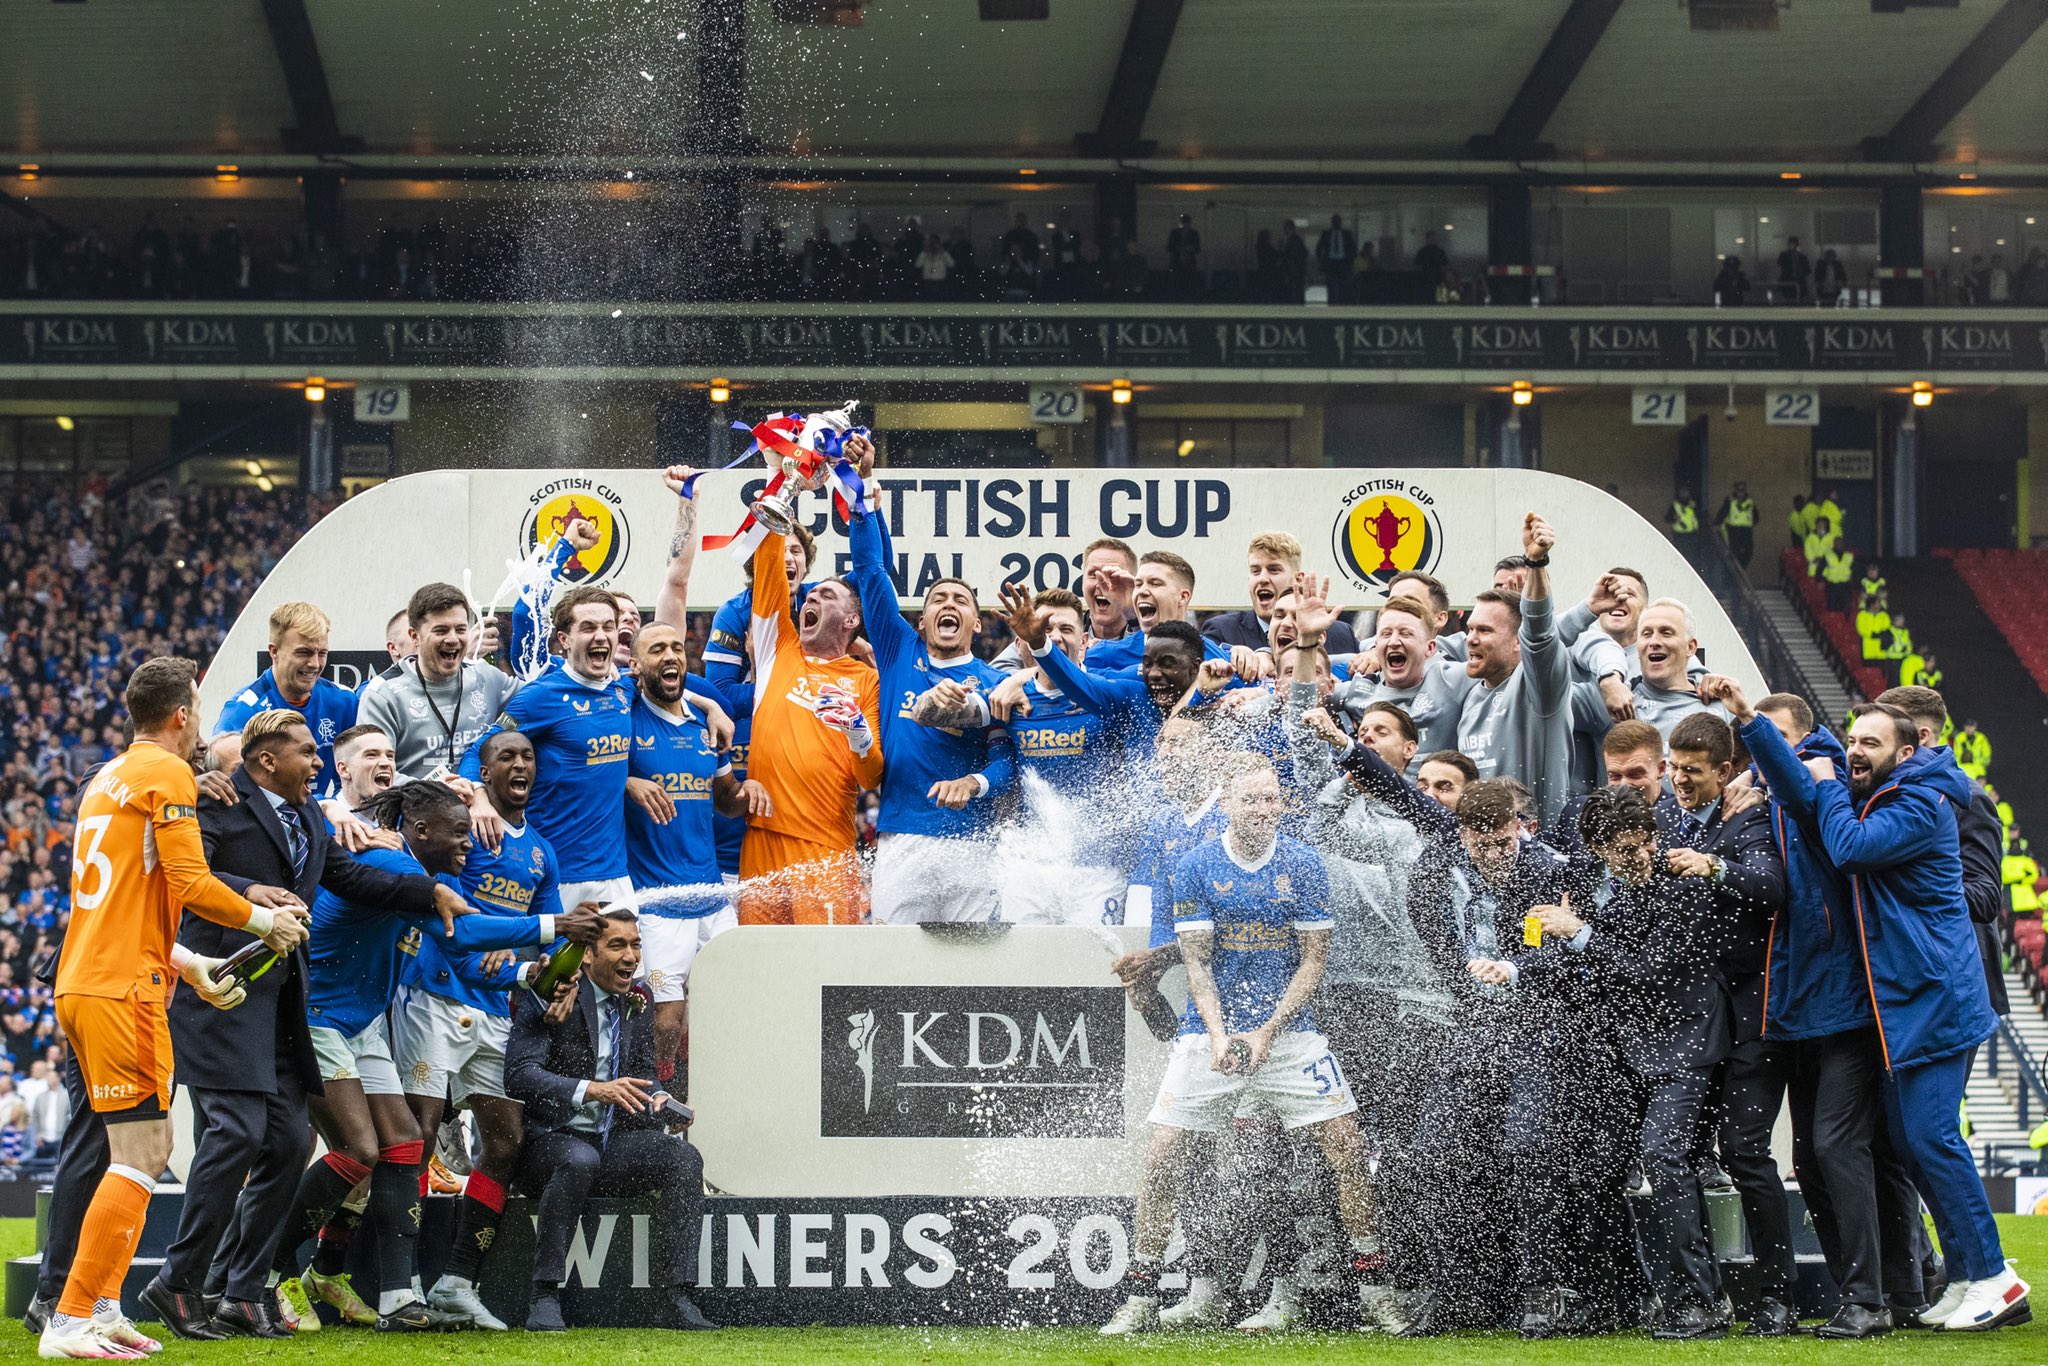 Ianis on Twitter: "Scottish Cup Champions ! 🏆💙 / Twitter